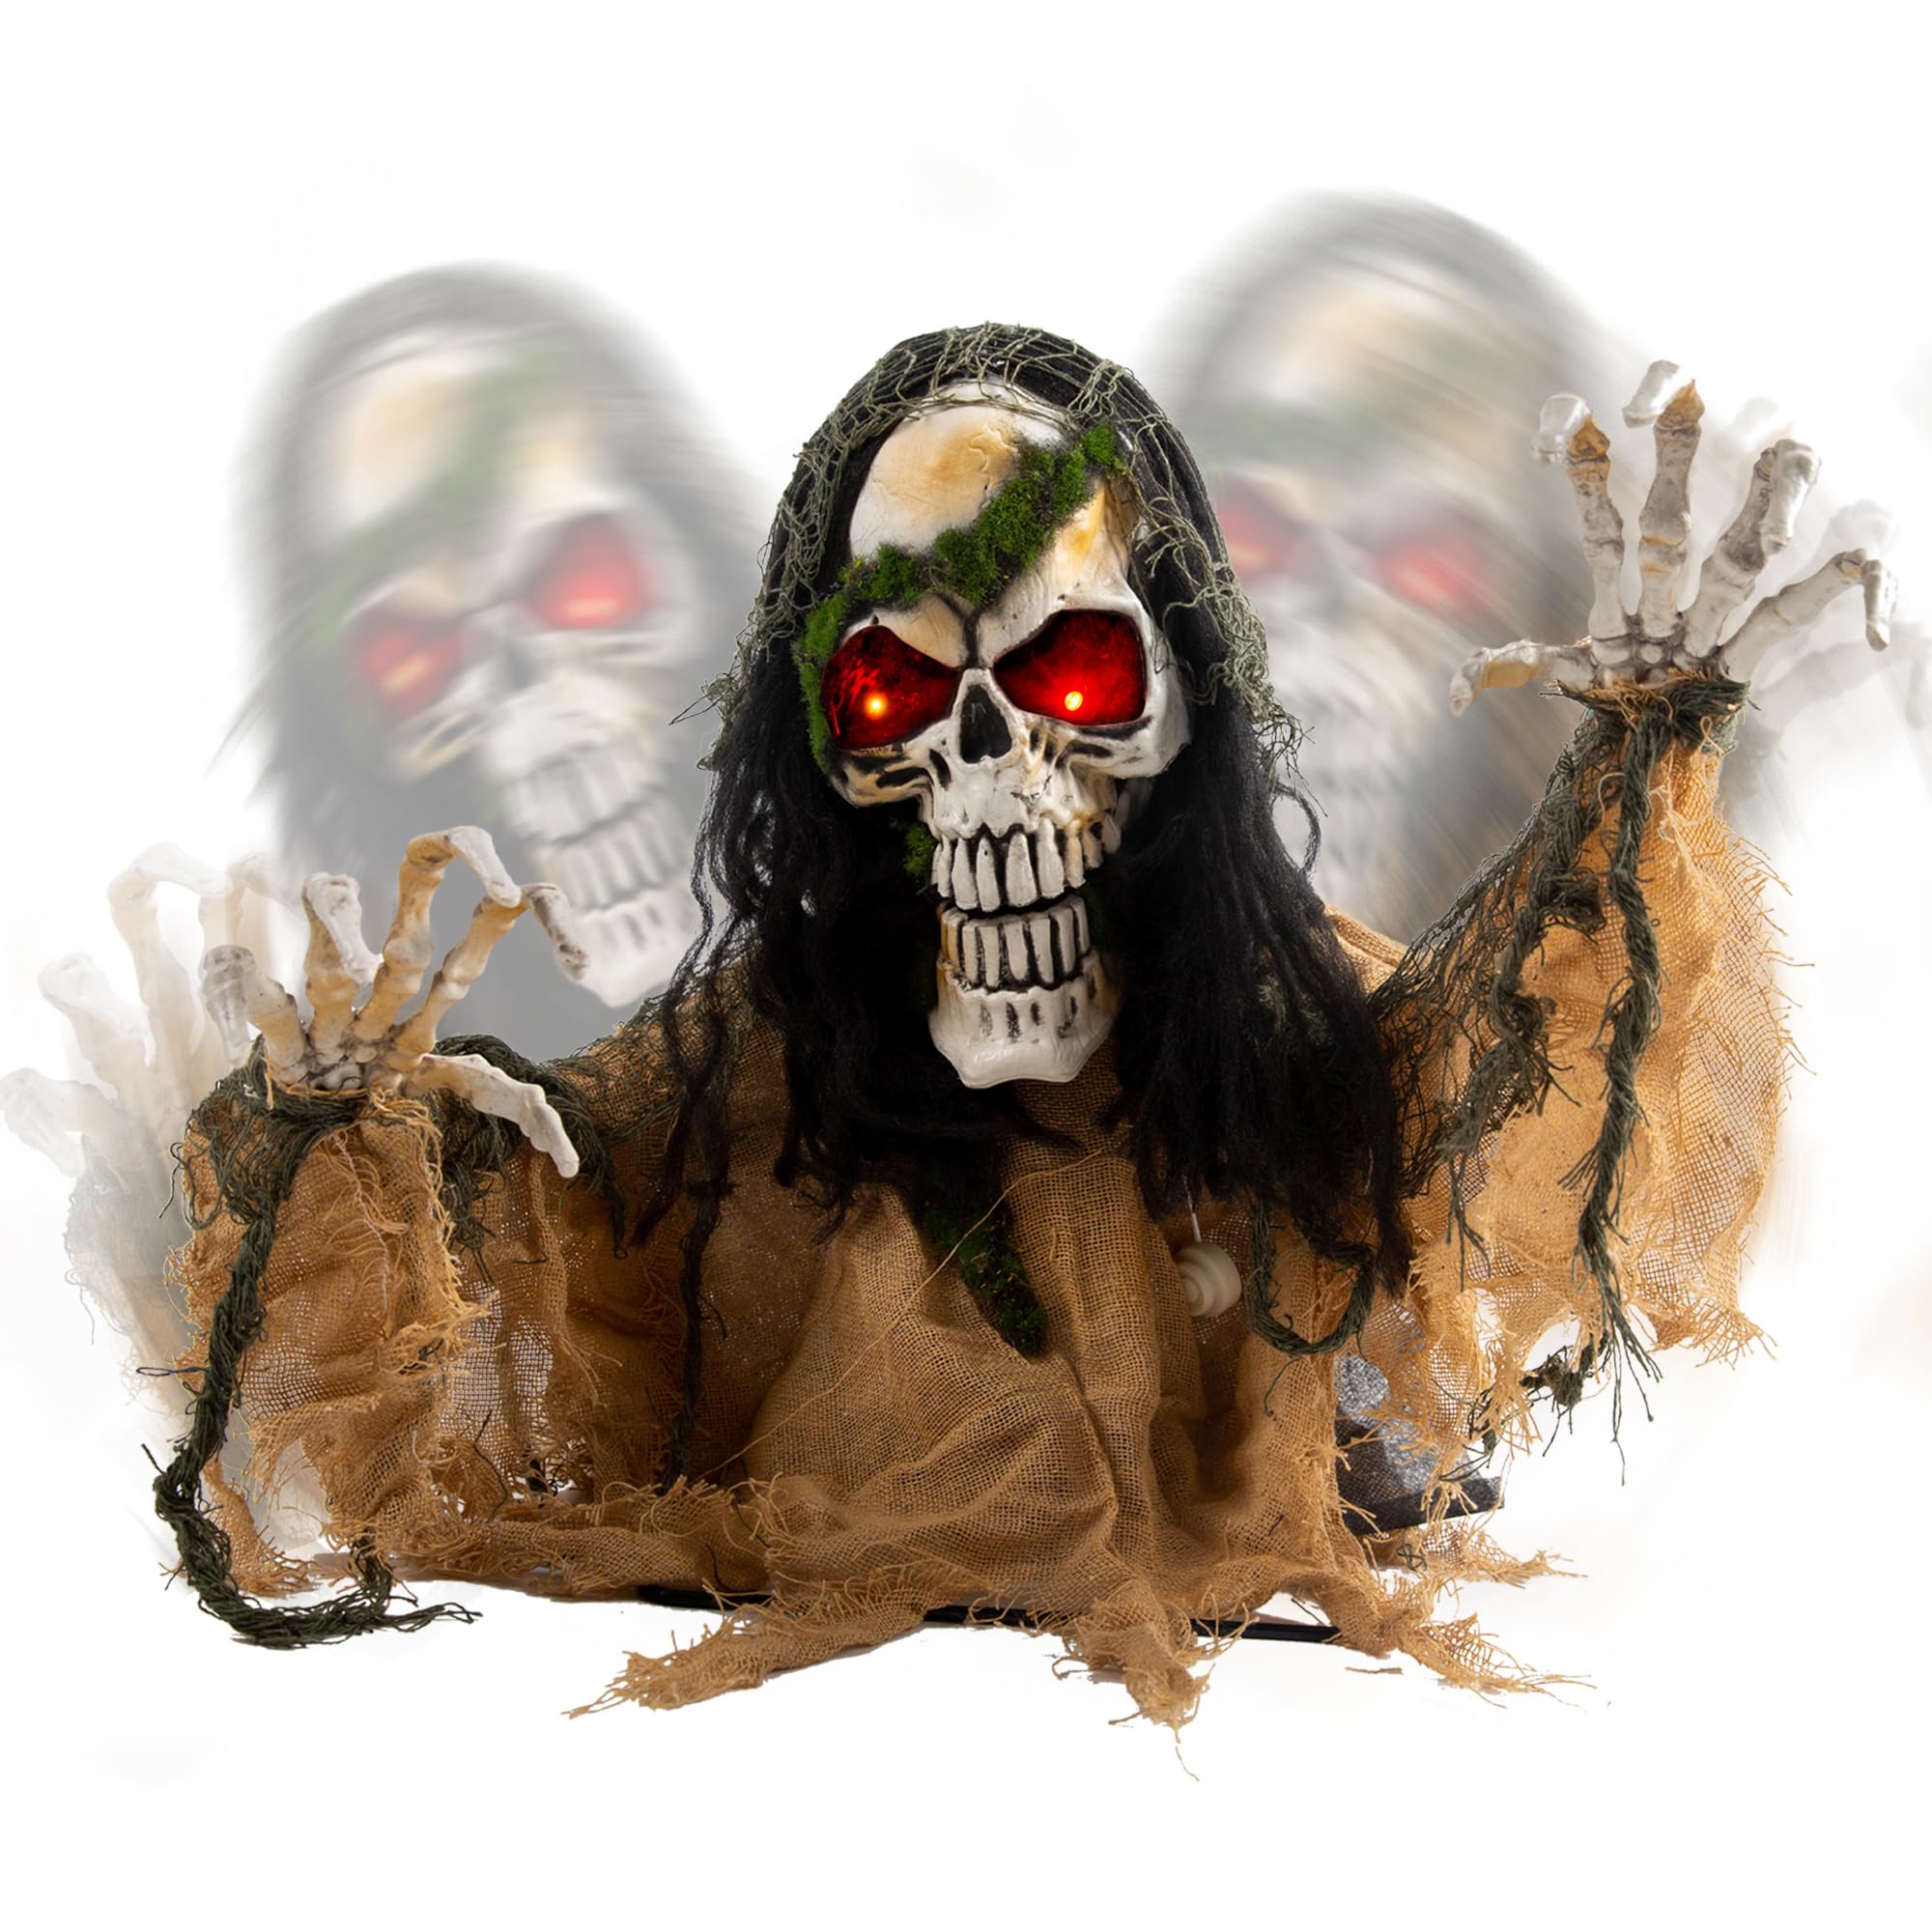 JOYIN Halloween Decoration Animated Zombie Groundbreaker, Light-up Skeleton Zombie Groundbreaker Prop with Creepy Sound for Halloween Outdoor, Lawn, Yard, Patio Decoration, Haunted House Decoration